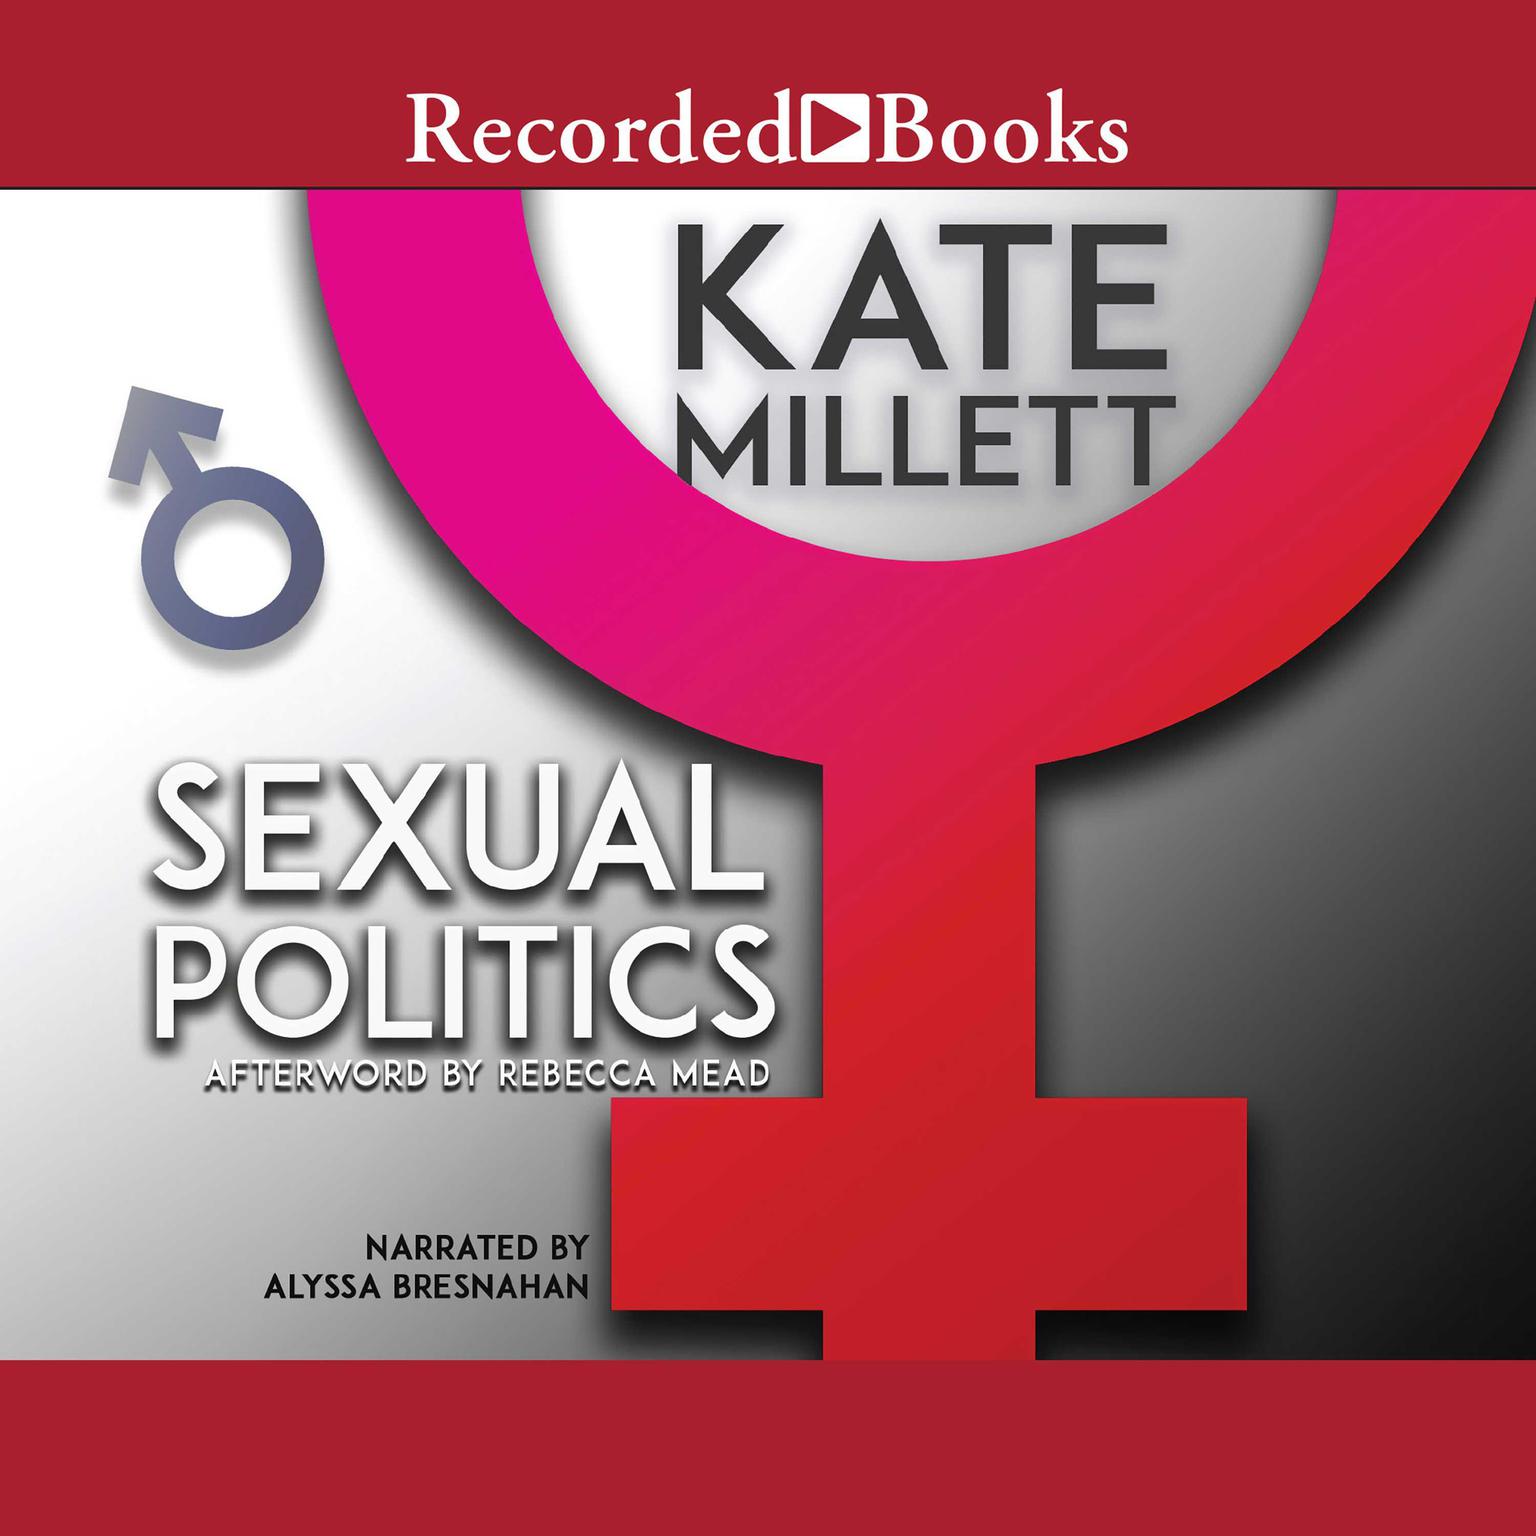 Sexual Politics Audiobook, by Kate Millett